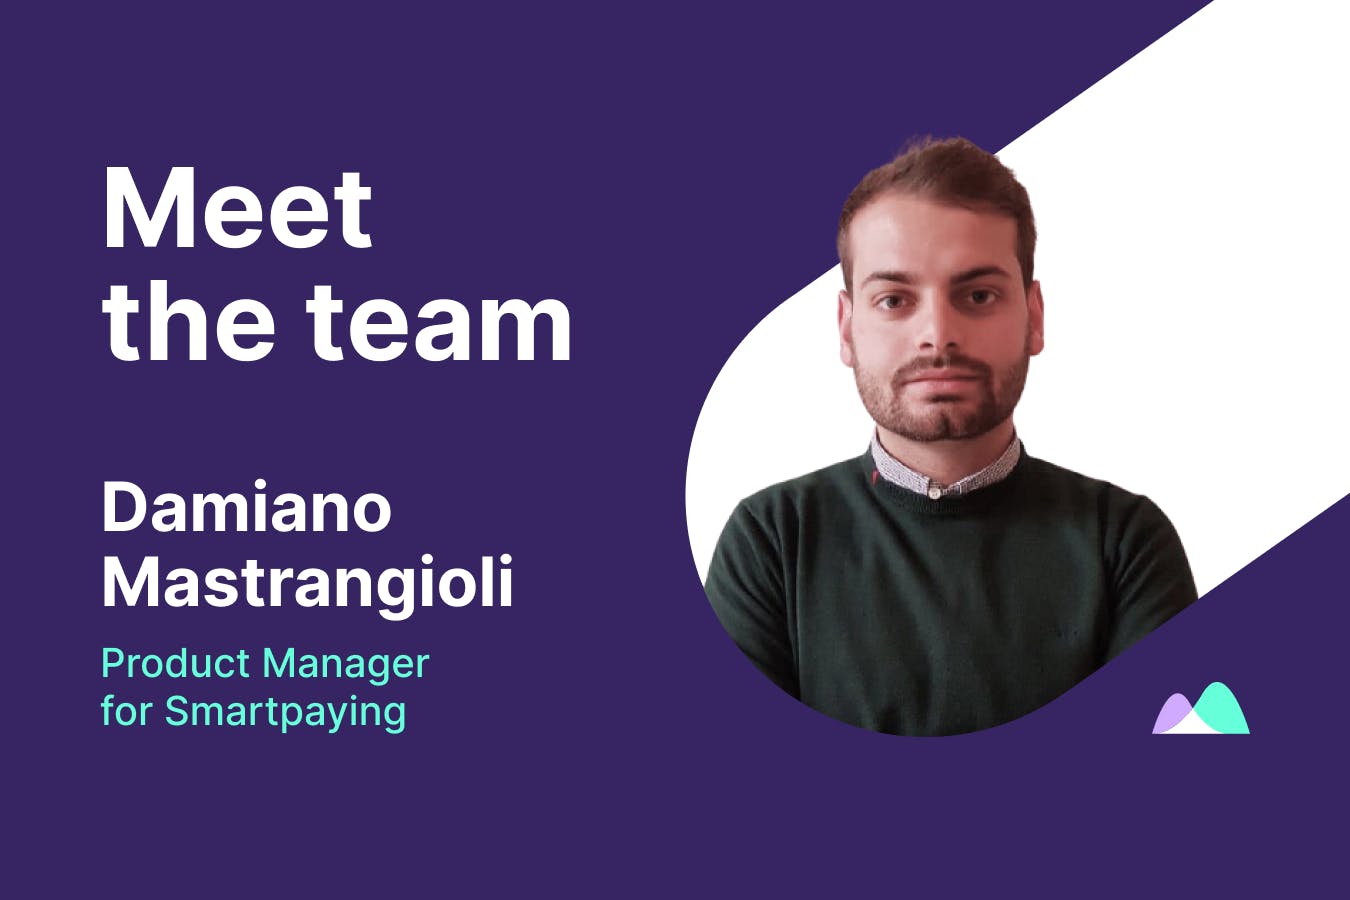 Damiano Mastrangioli, Product Manager of Smartpaying